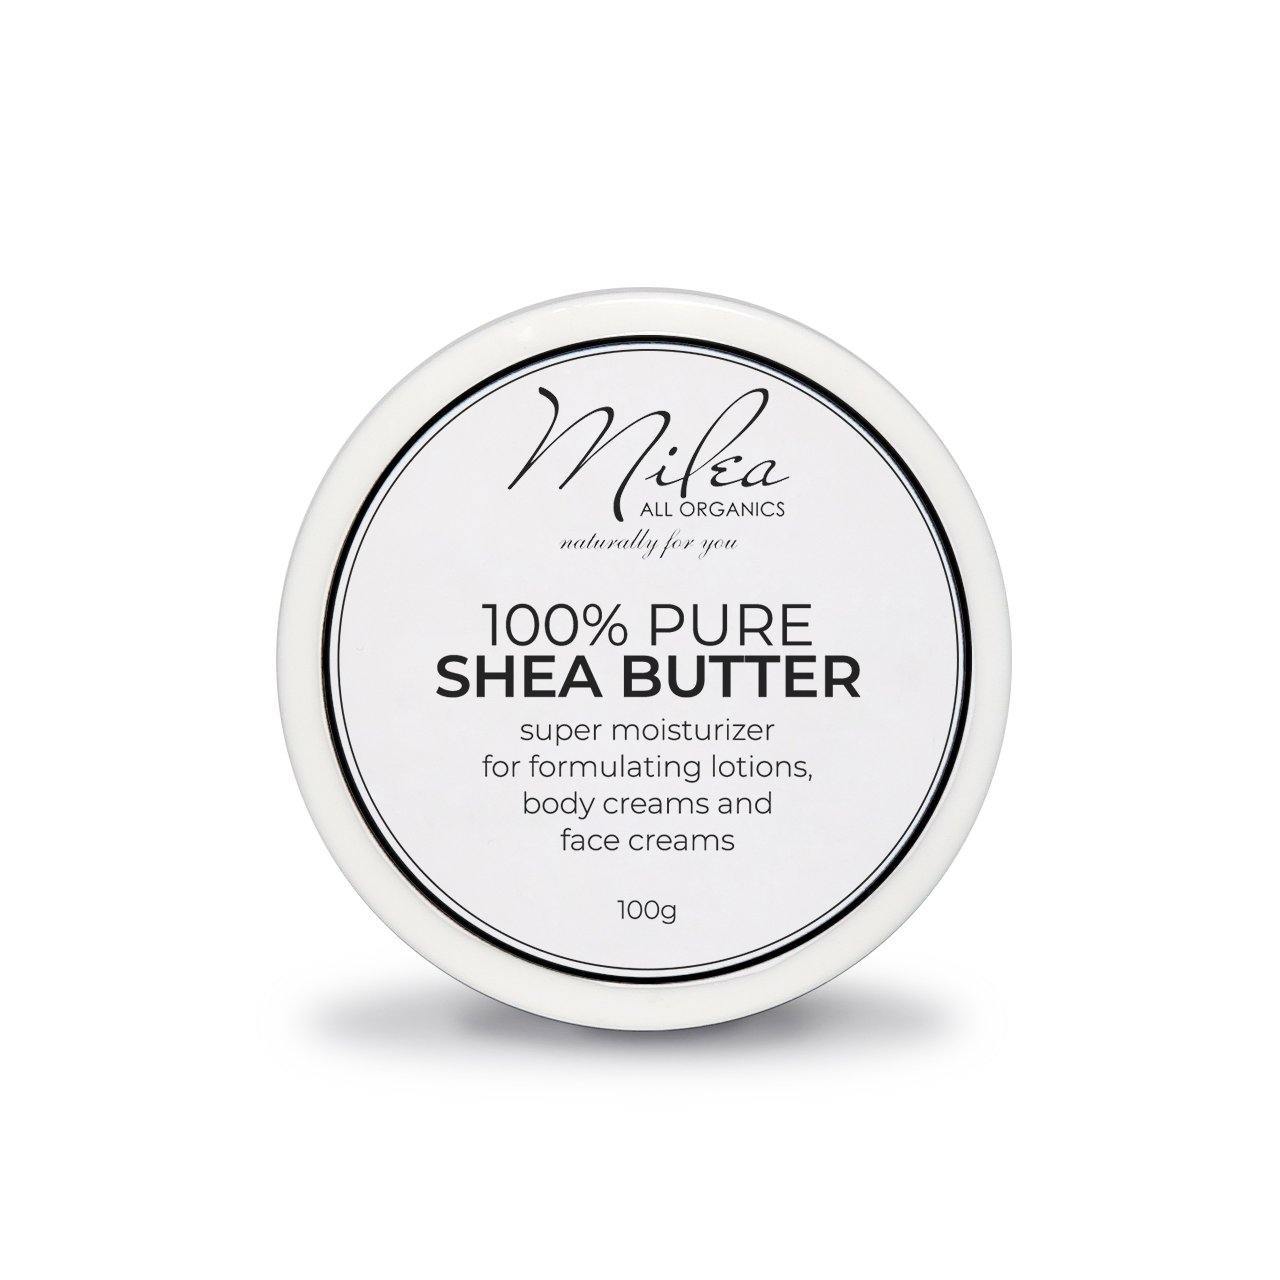 100% Pure Shea Butter - Milea All Organics - Philippines